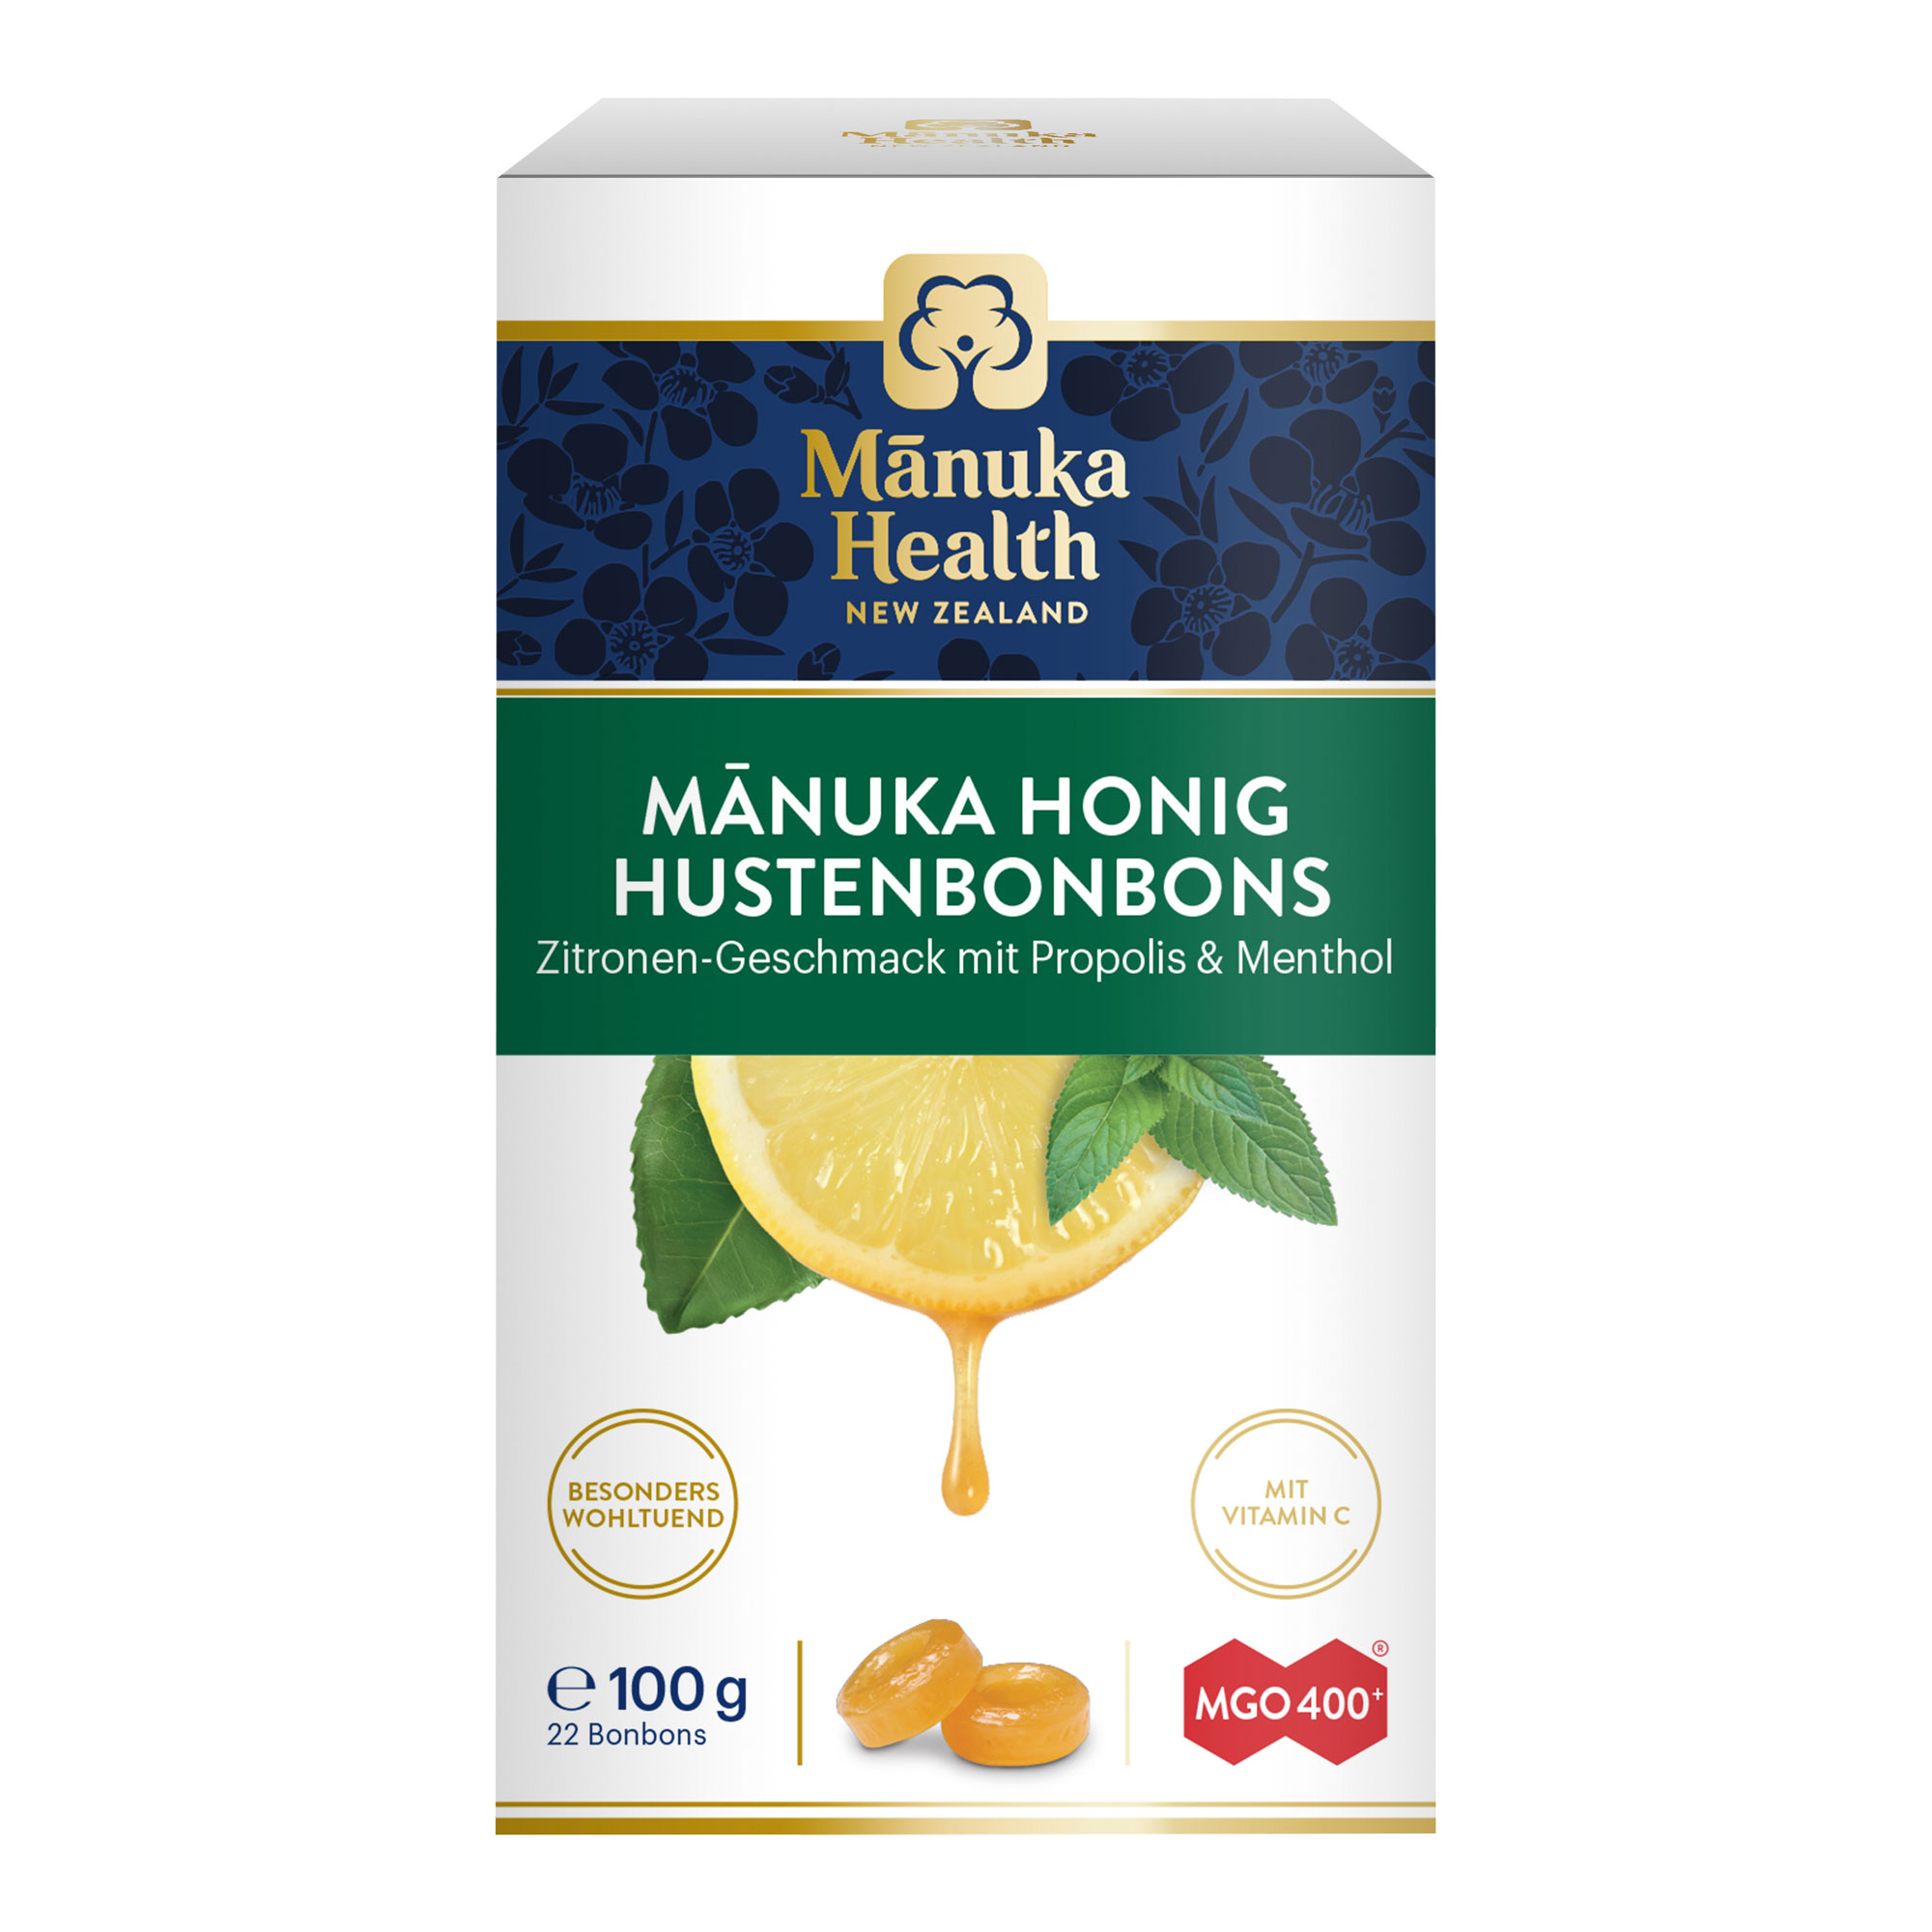 Hustenbonbons Zitronen-Geschmack mit Propolis & Menthol.